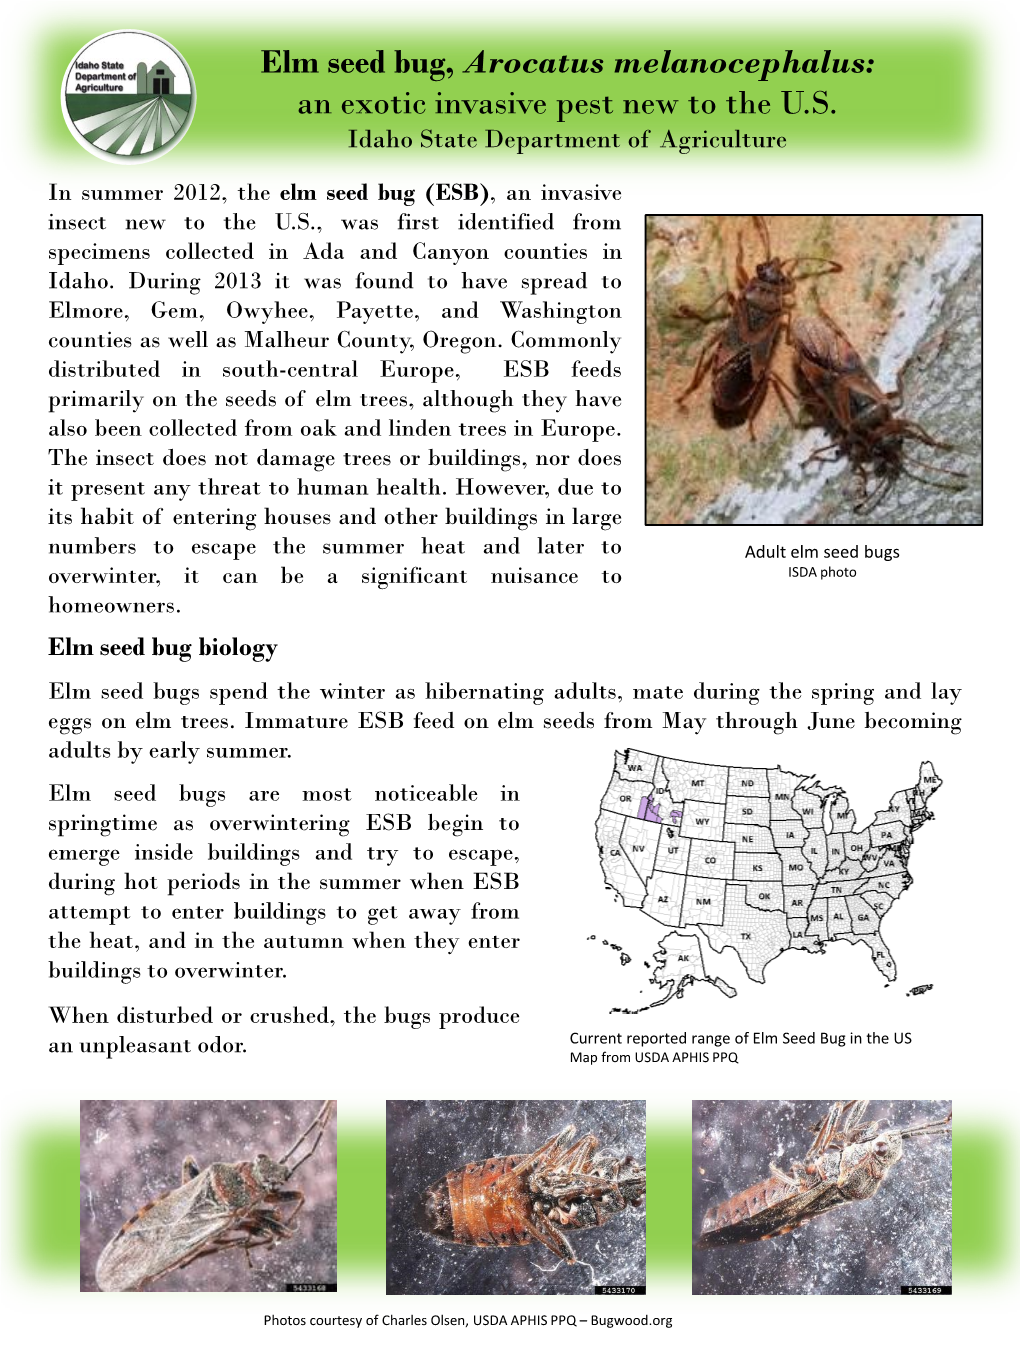 PP Elm Seed Bug, Arocatus Melanocephalus: an Exotic Invasive